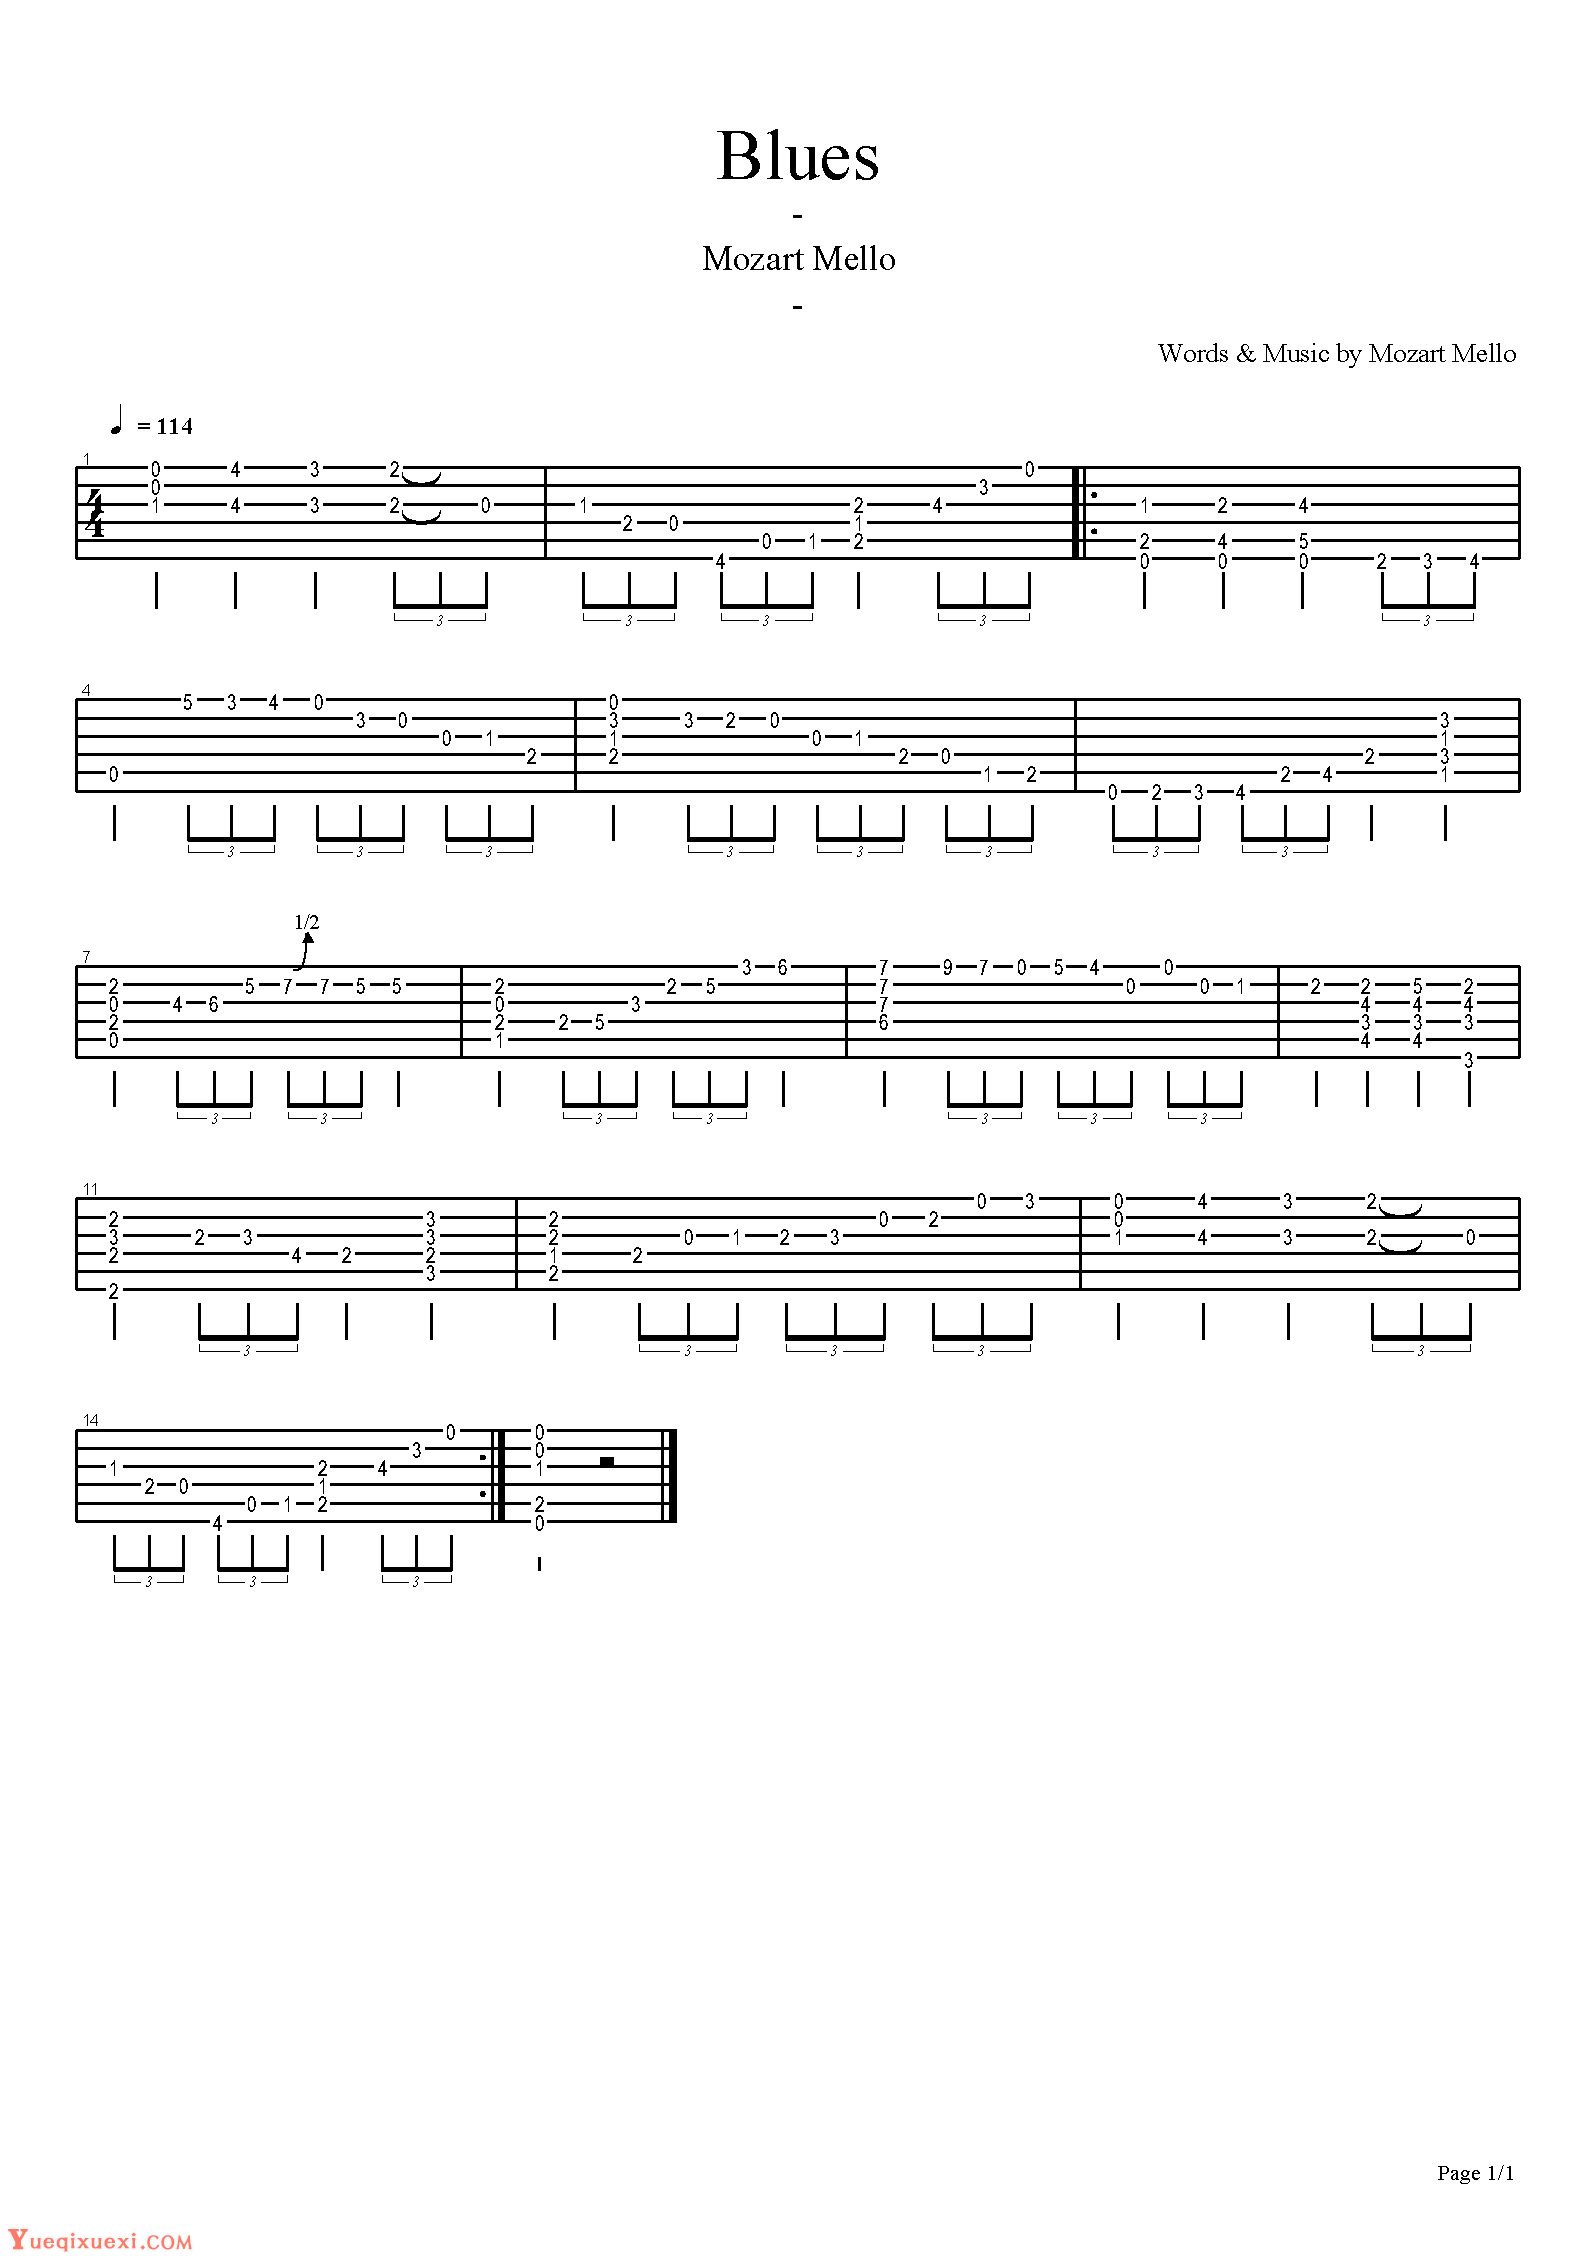 Canon rock吉他谱 - JerryC - 电吉他谱 - 卡农摇滚版 超完整版本 - 琴谱网